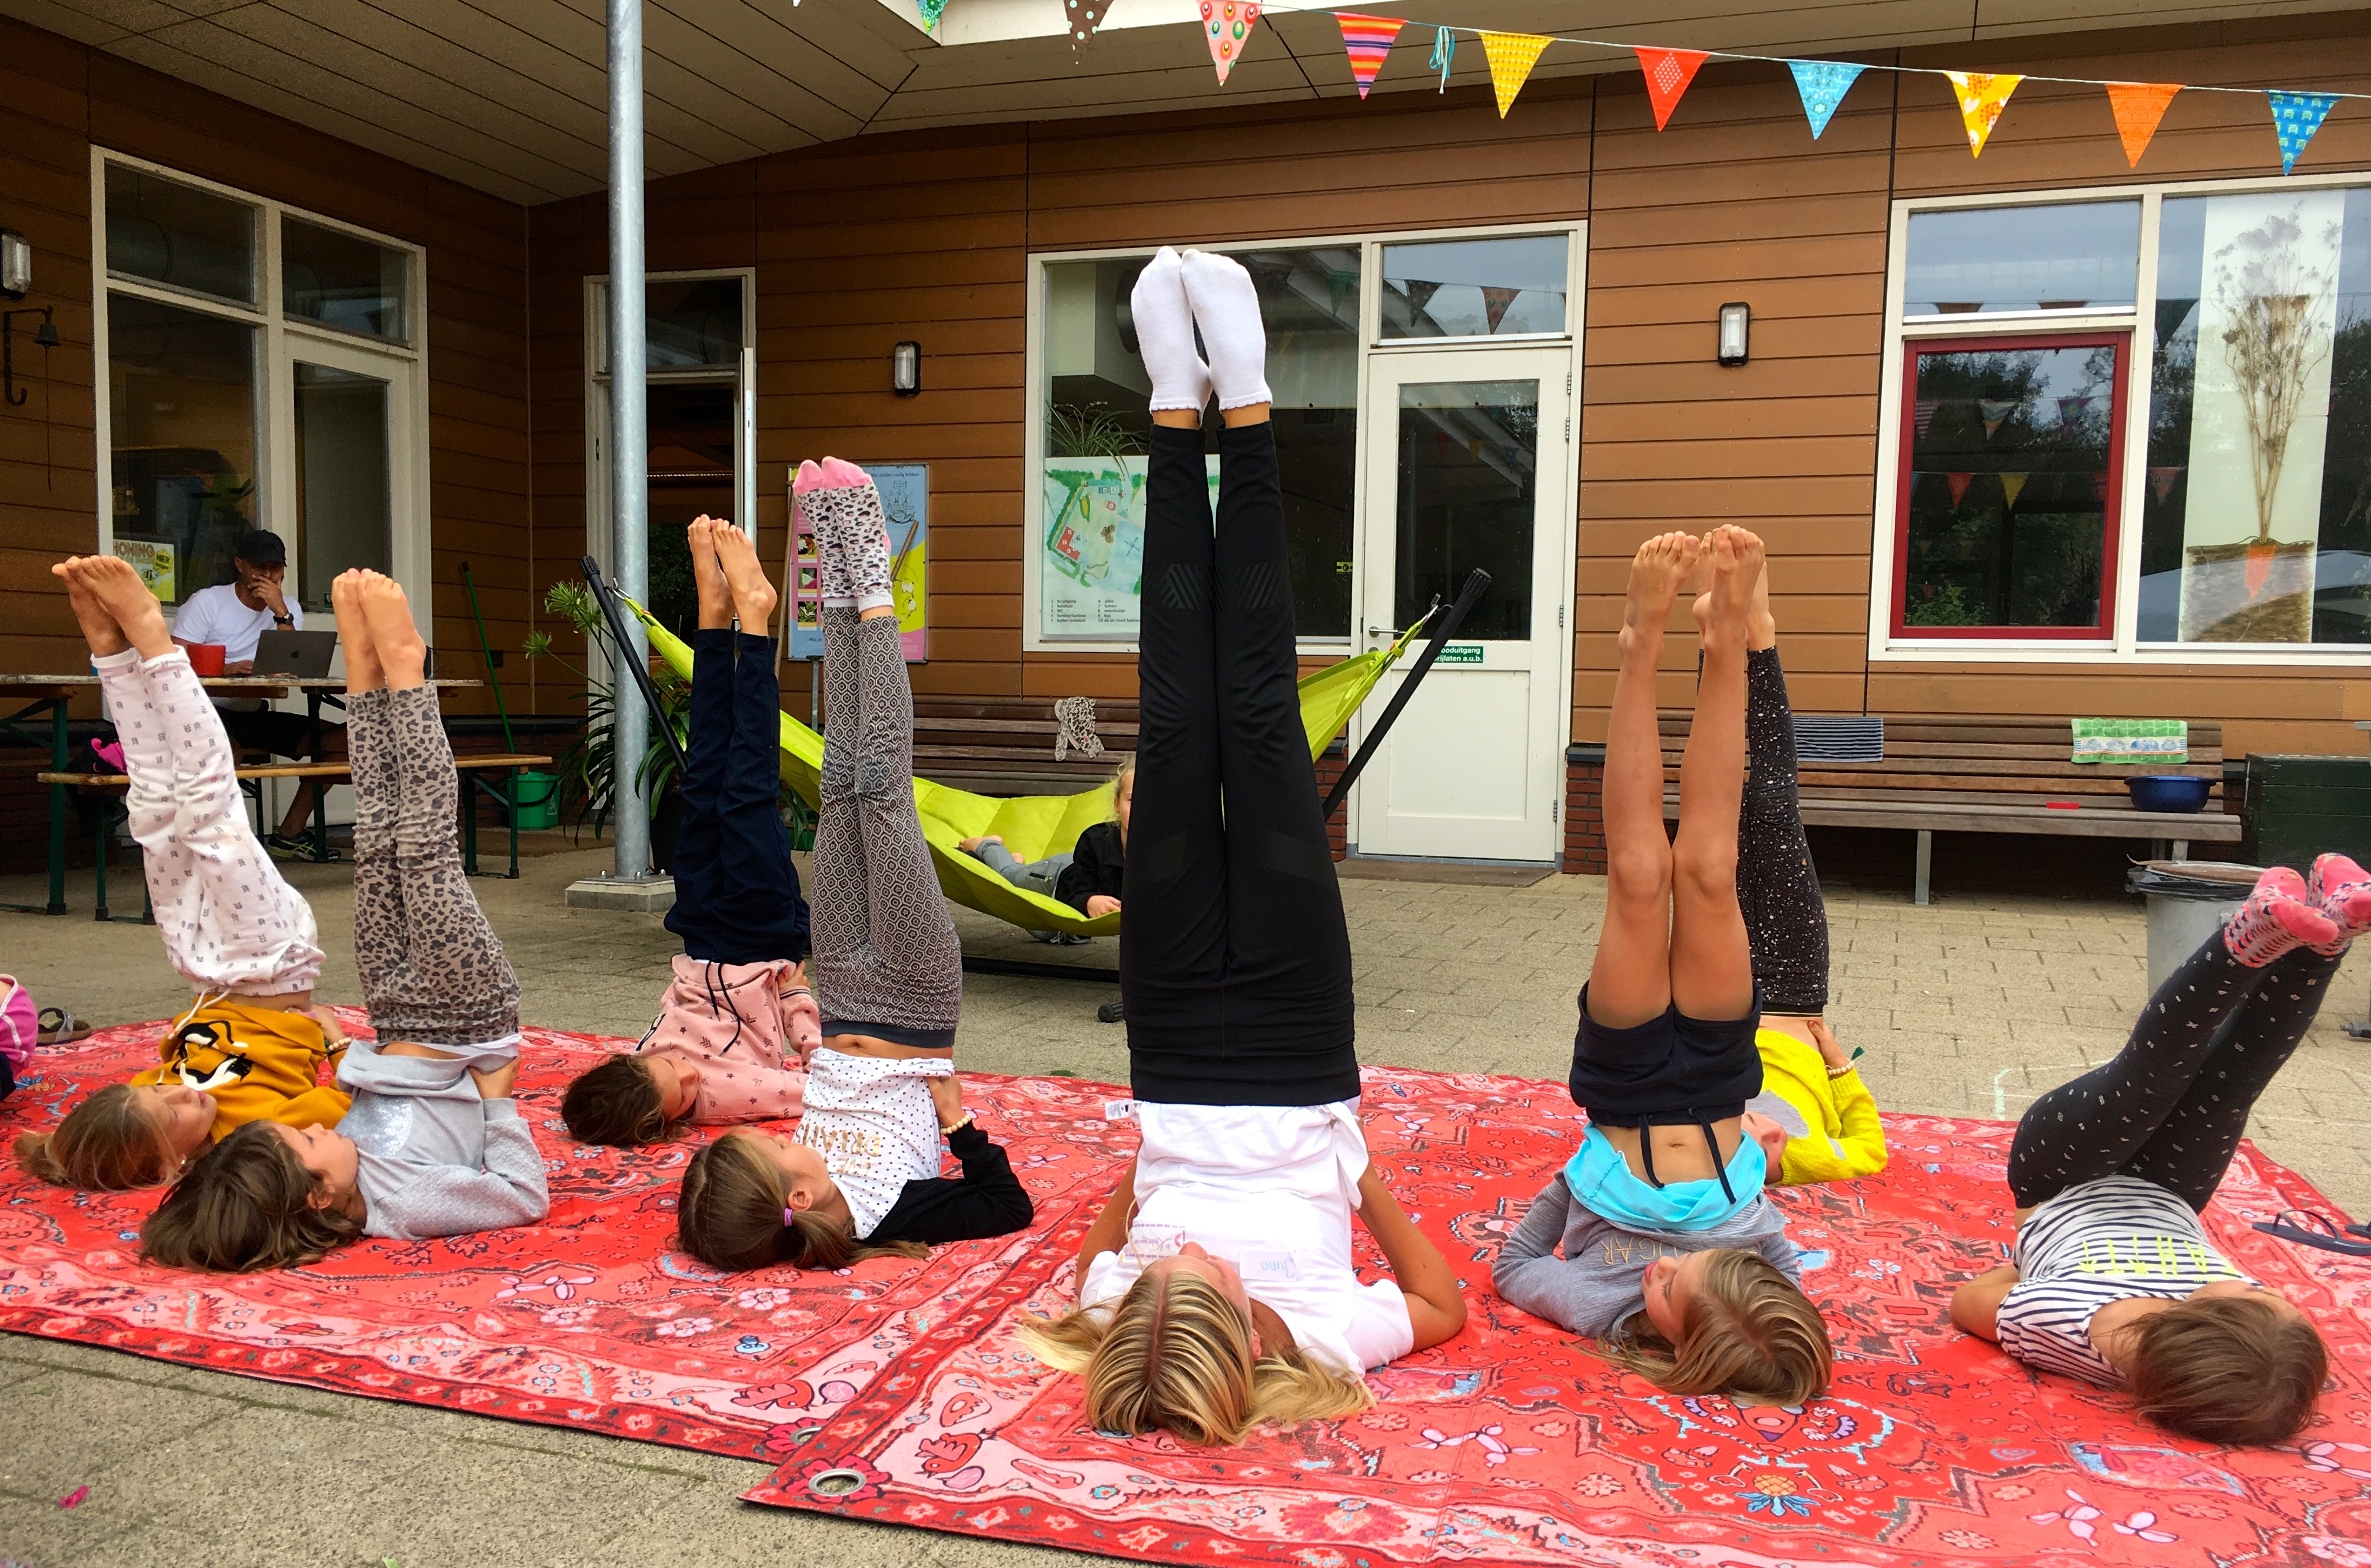 de Kinderyogatuin yogakamp zomerkamp kinderyoga - de kaars - kinderyoga mindfulness meditatie massage buitenyoga Aemstel schooltuin Amsterdam Amstelveen